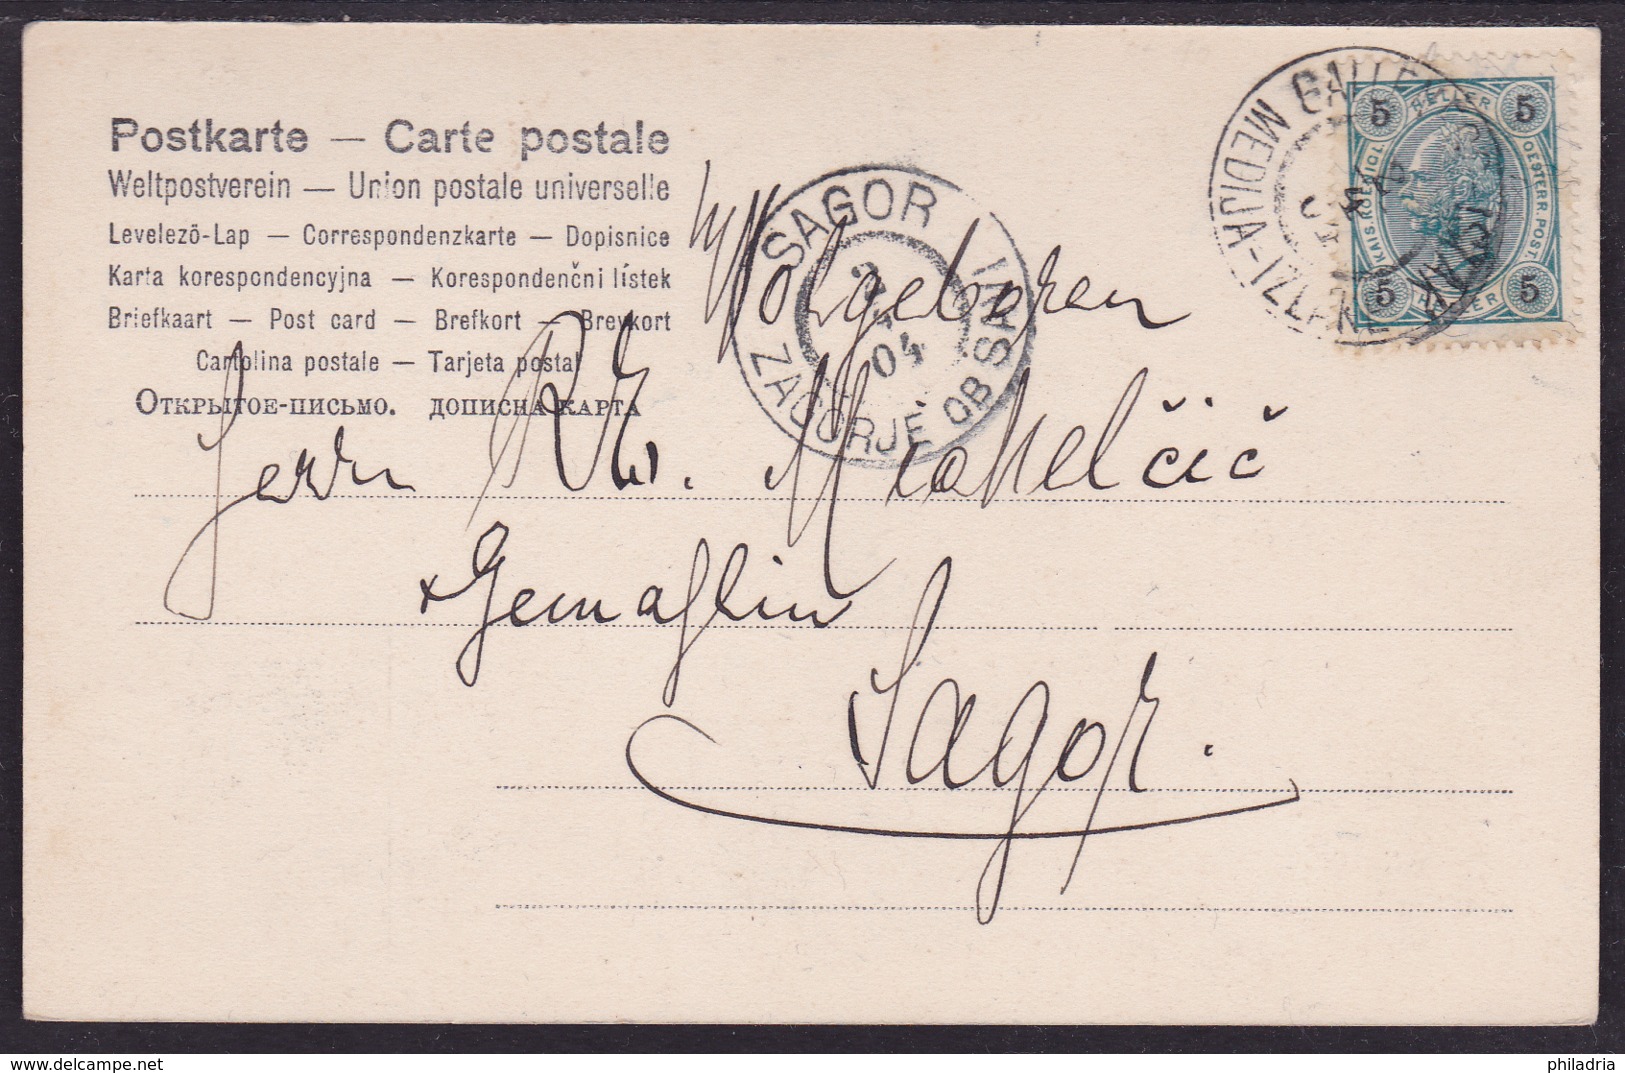 Galleneg Islak - Medija - Izlake, On Picture Postcard,  1904 - Covers & Documents